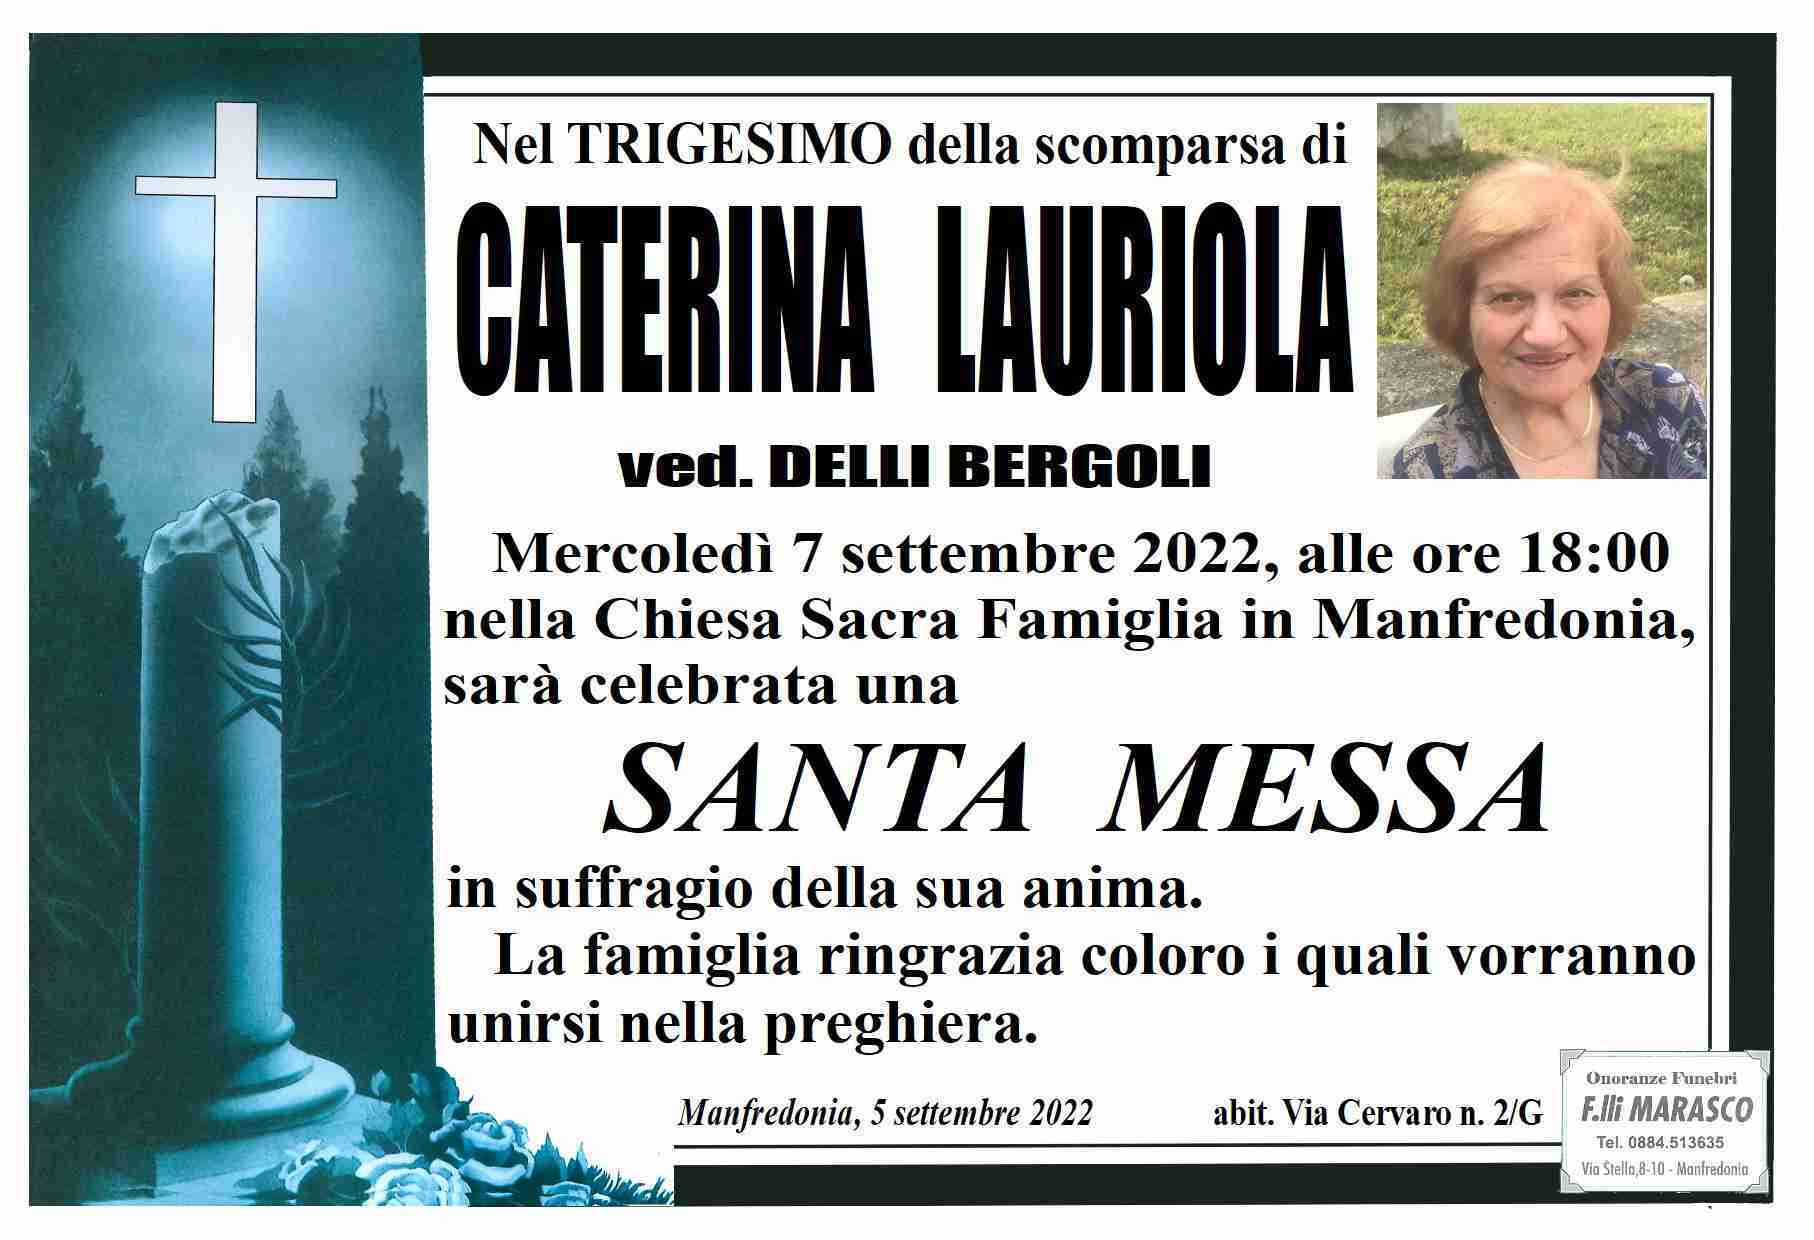 Caterina Lauriola